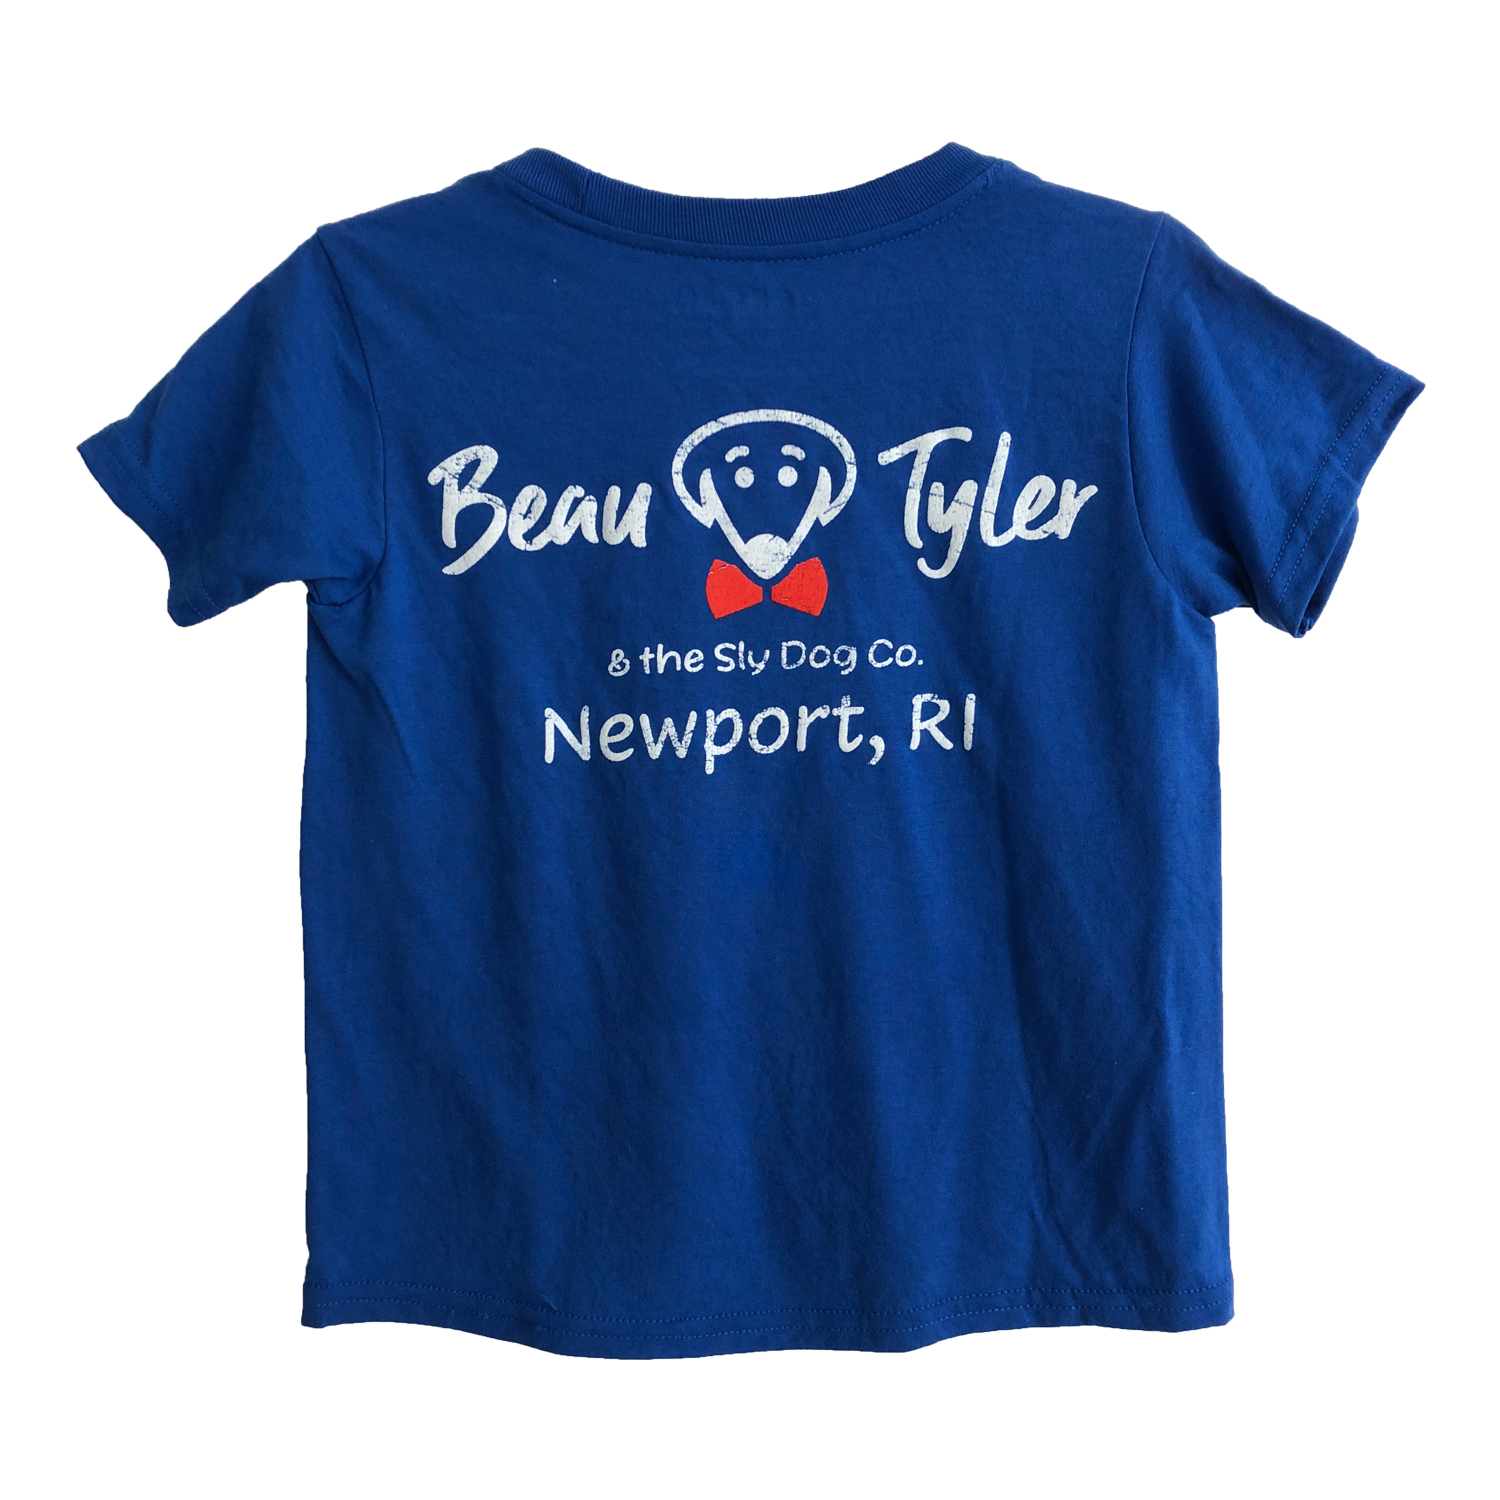 Beau Tyler - Kids vintage Kelly shirt royal blue Newport back temp